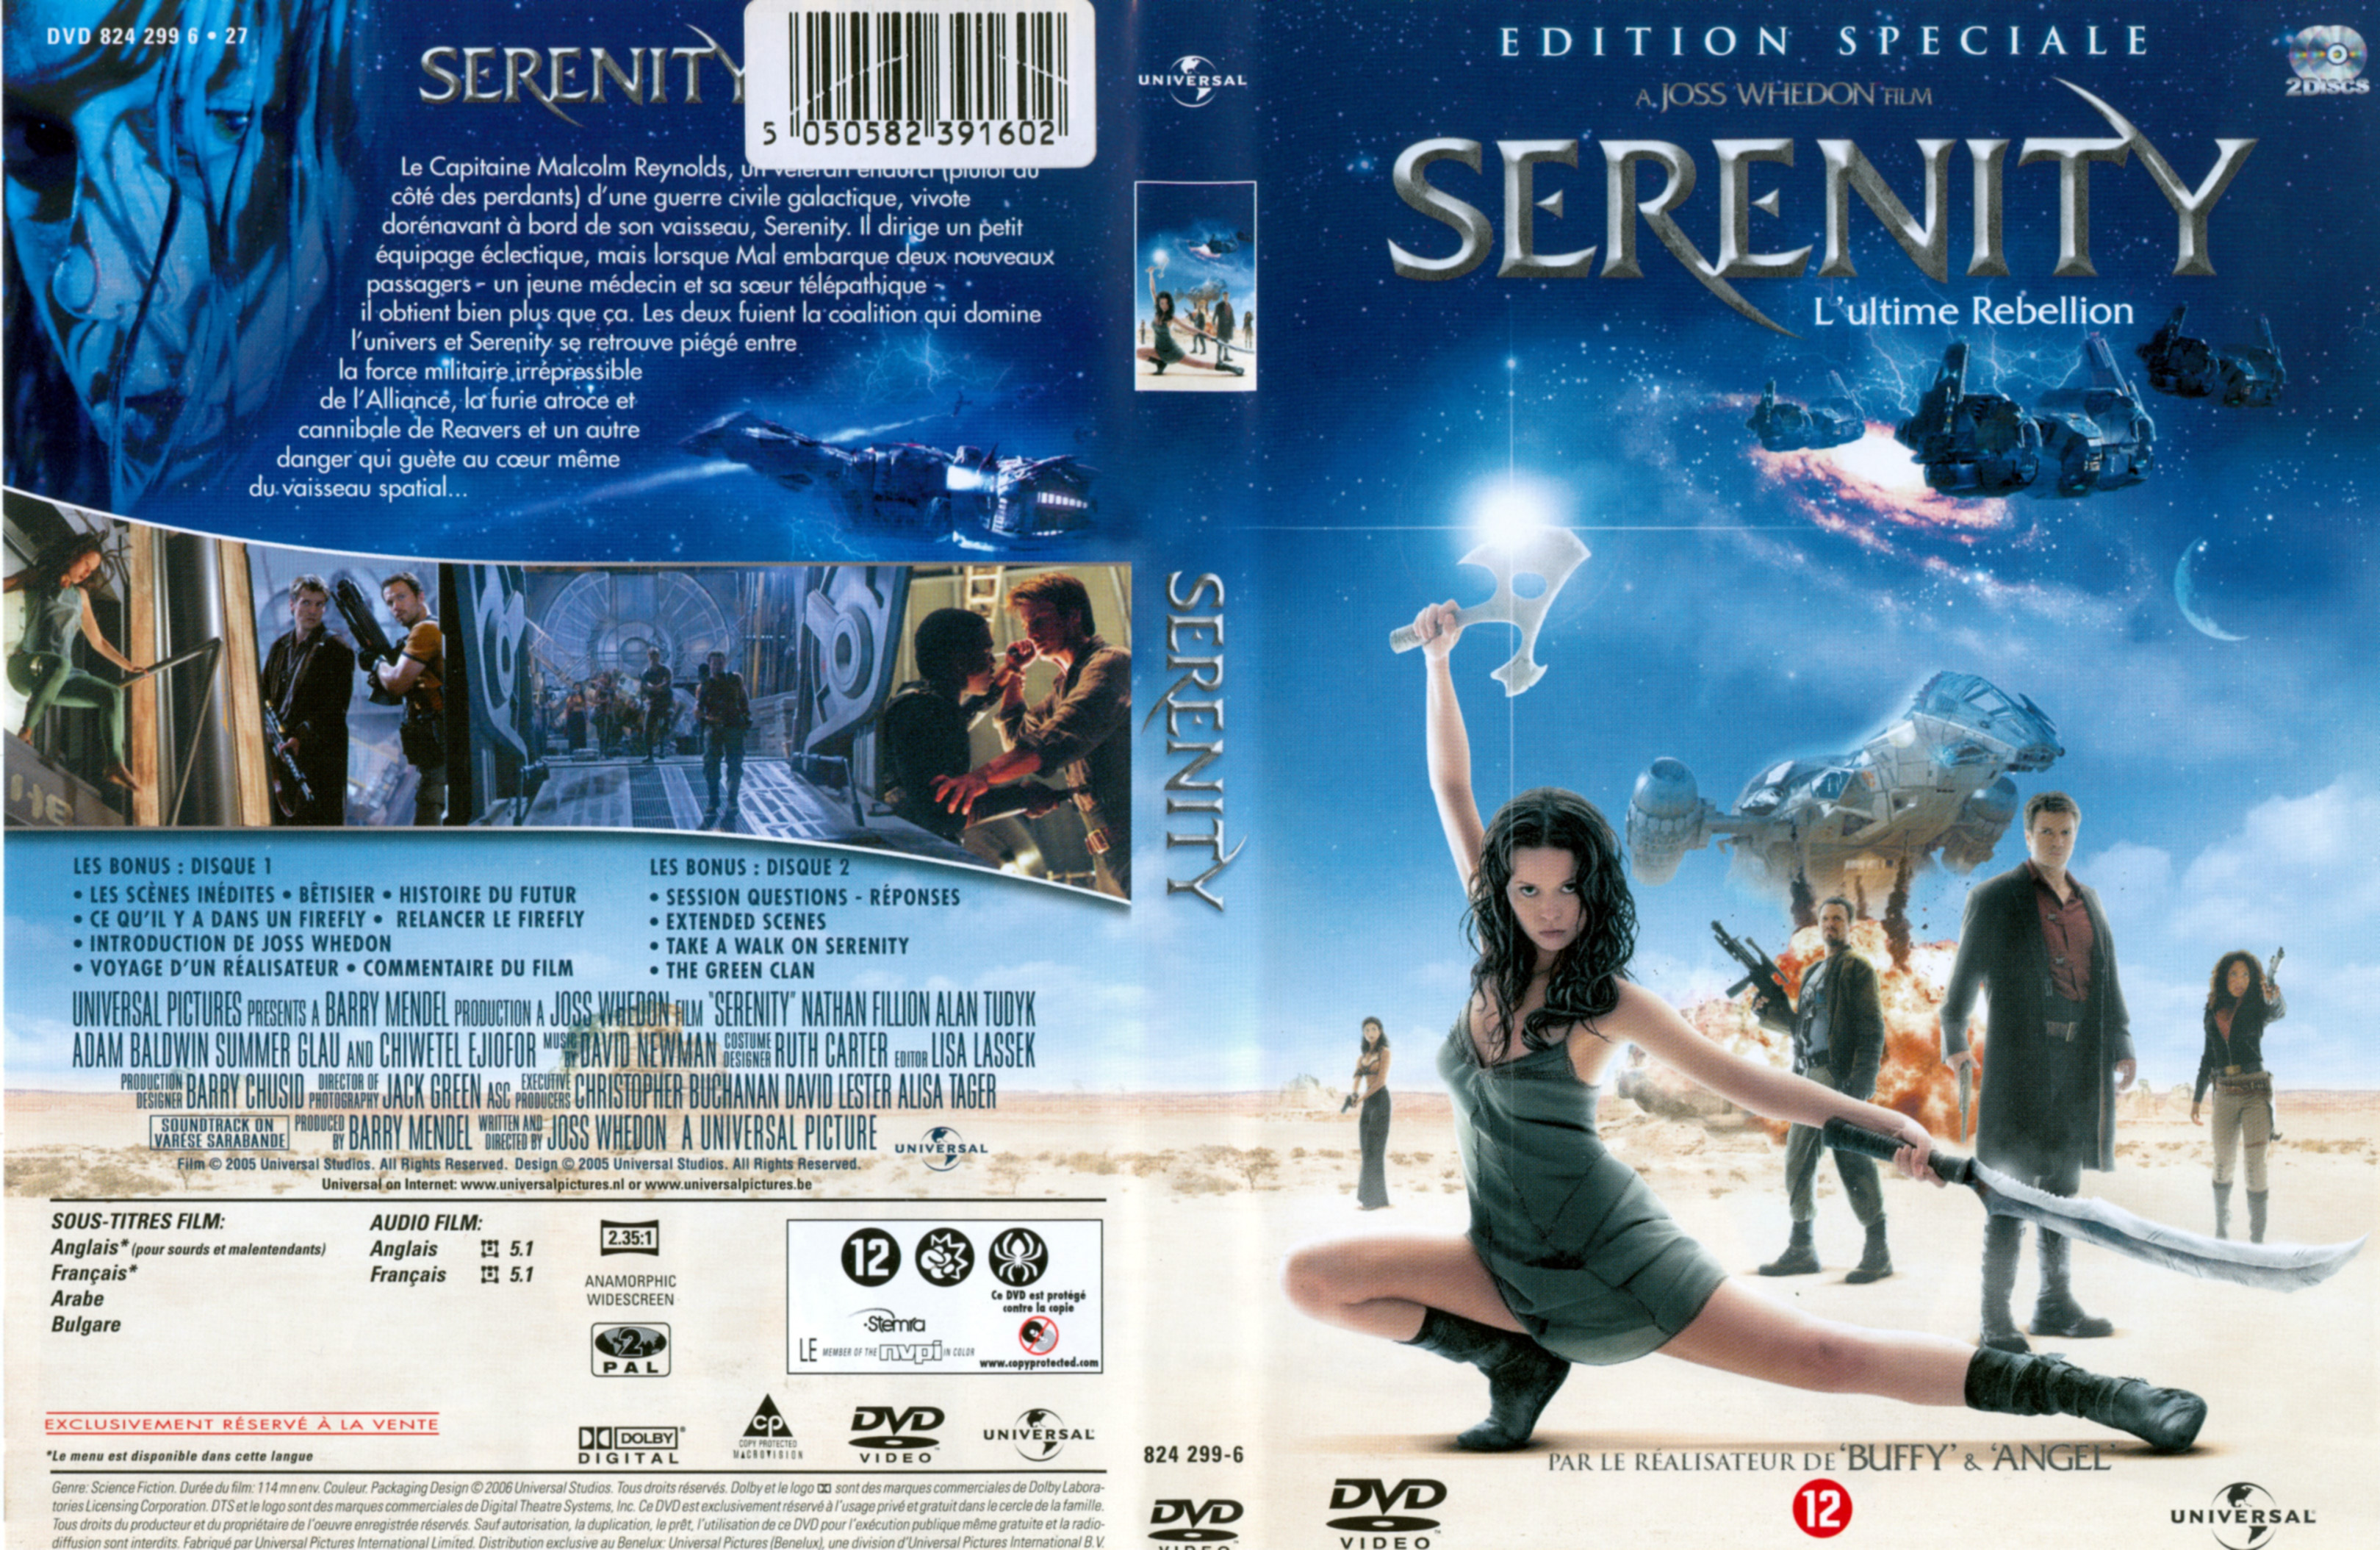 Jaquette DVD Serenity l